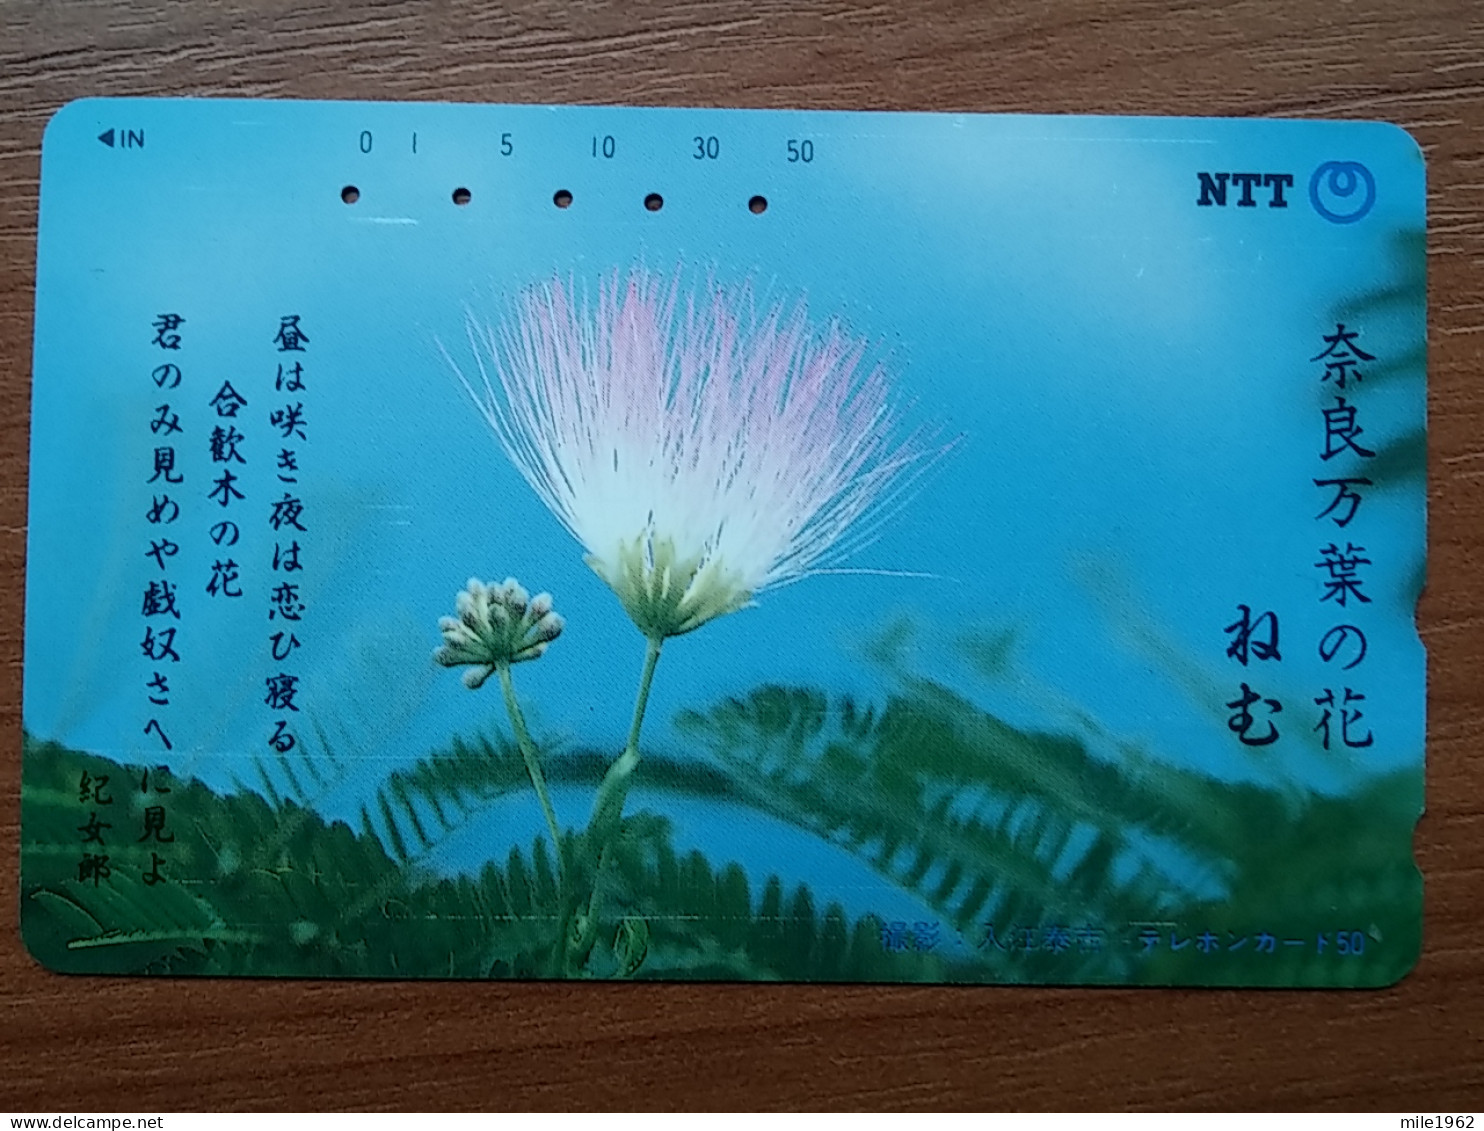 T-382 - JAPAN, Japon, Nipon, TELECARD, PHONECARD, Flower, Fleur, NTT 331-249 - Fiori